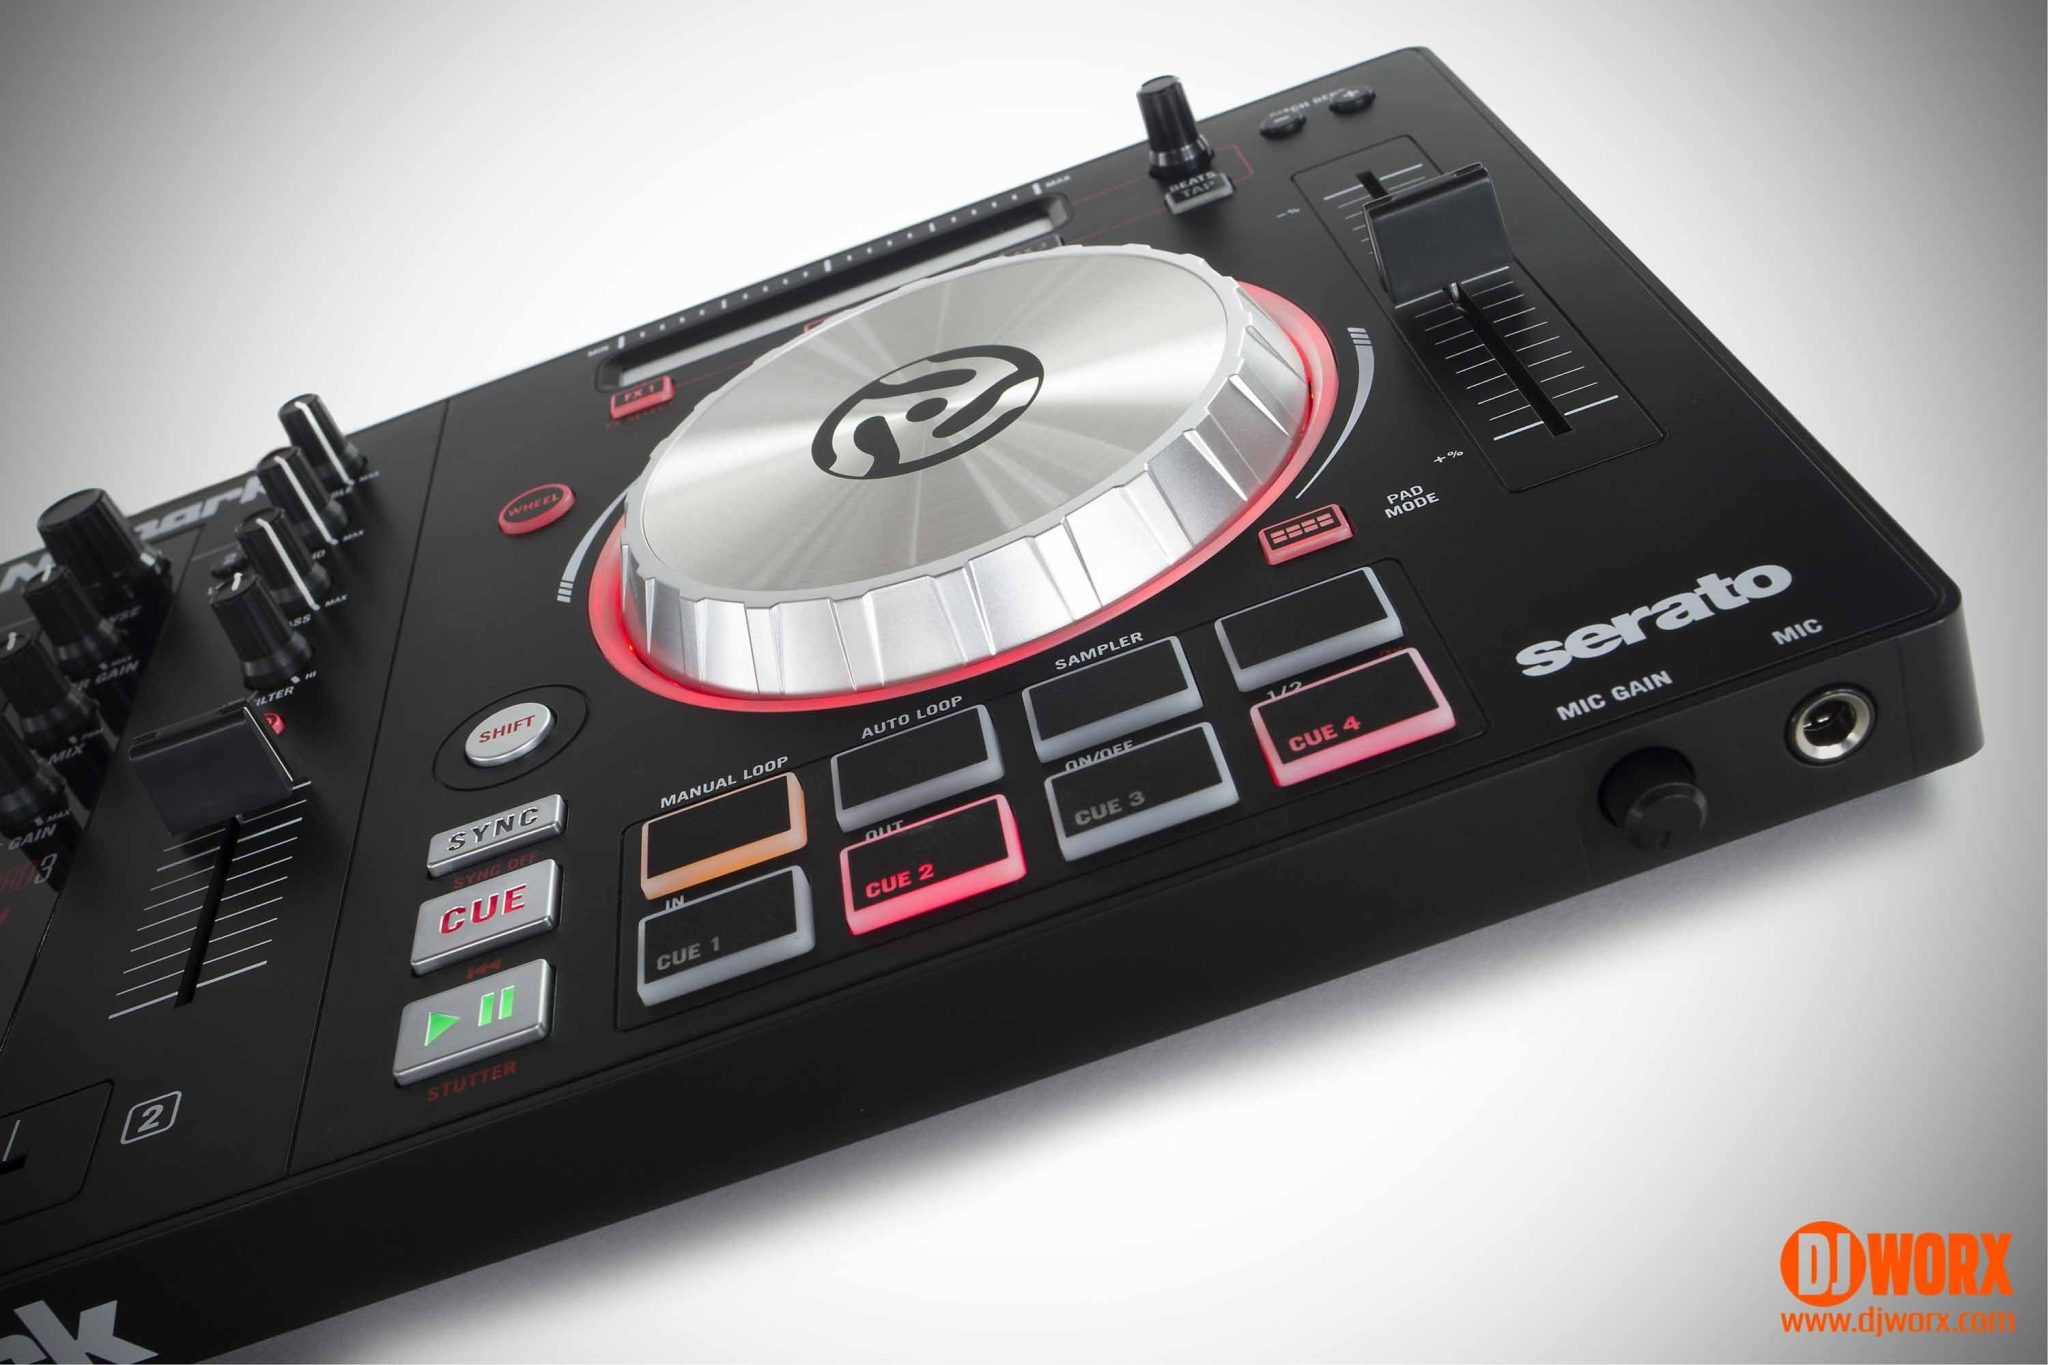 Numark Mixtrack Pro 3 serato DJ Intro controller review (7)